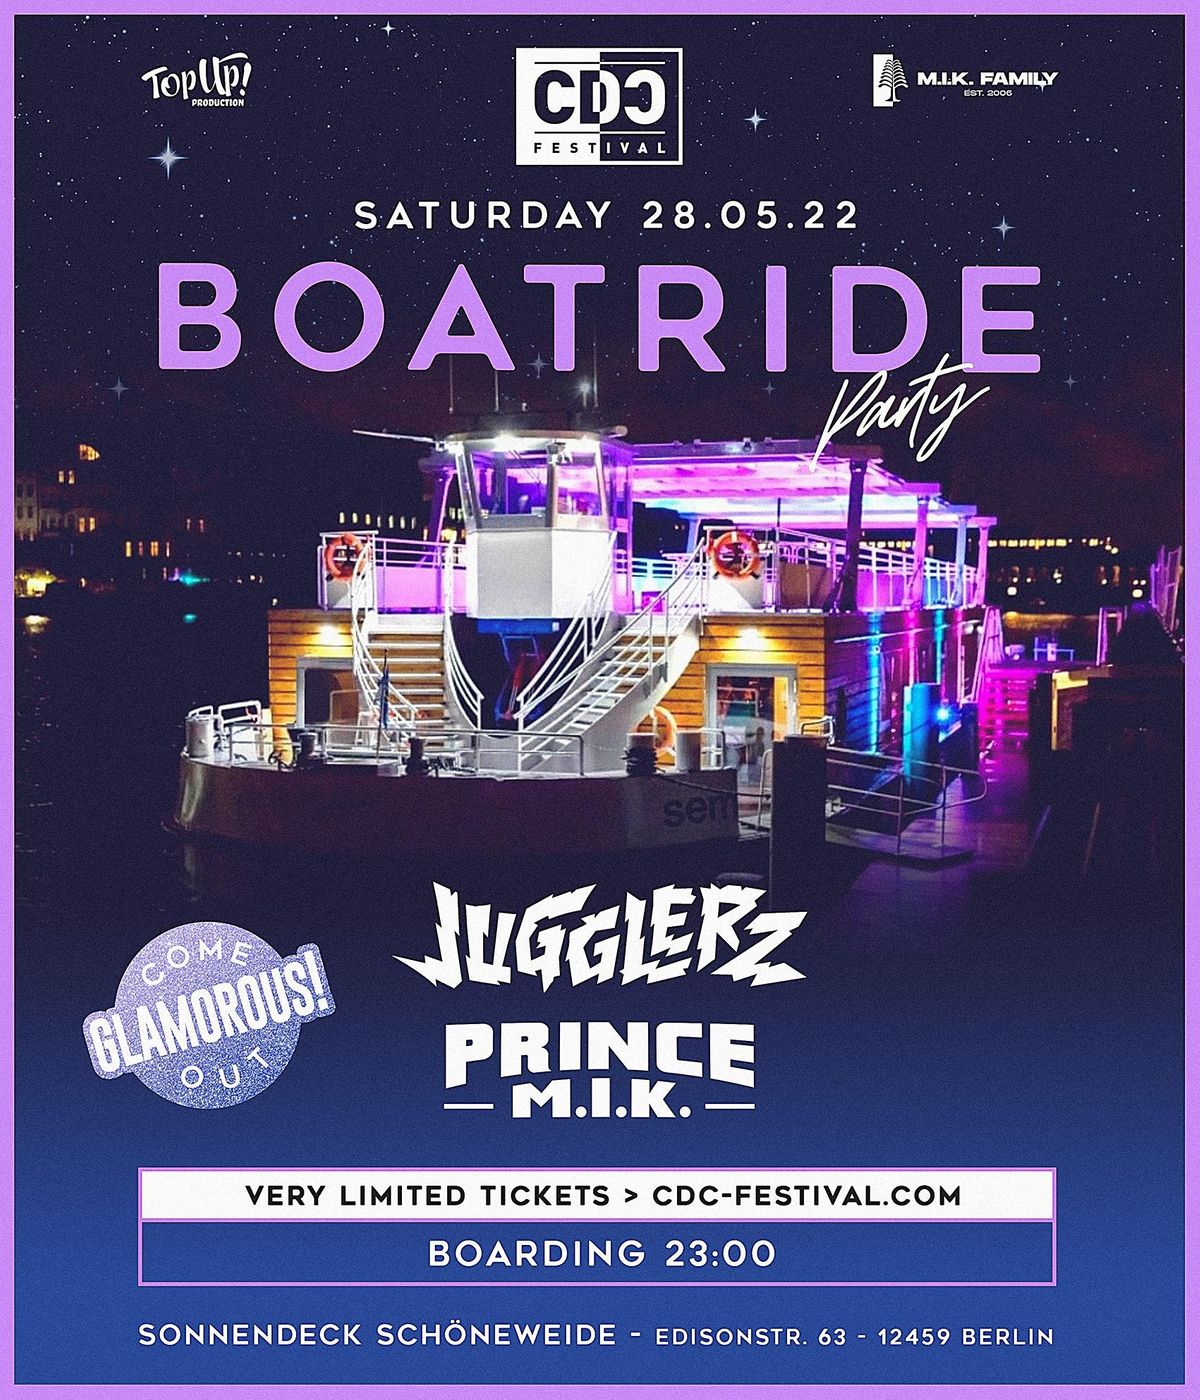 CDC Festival Boatride Party